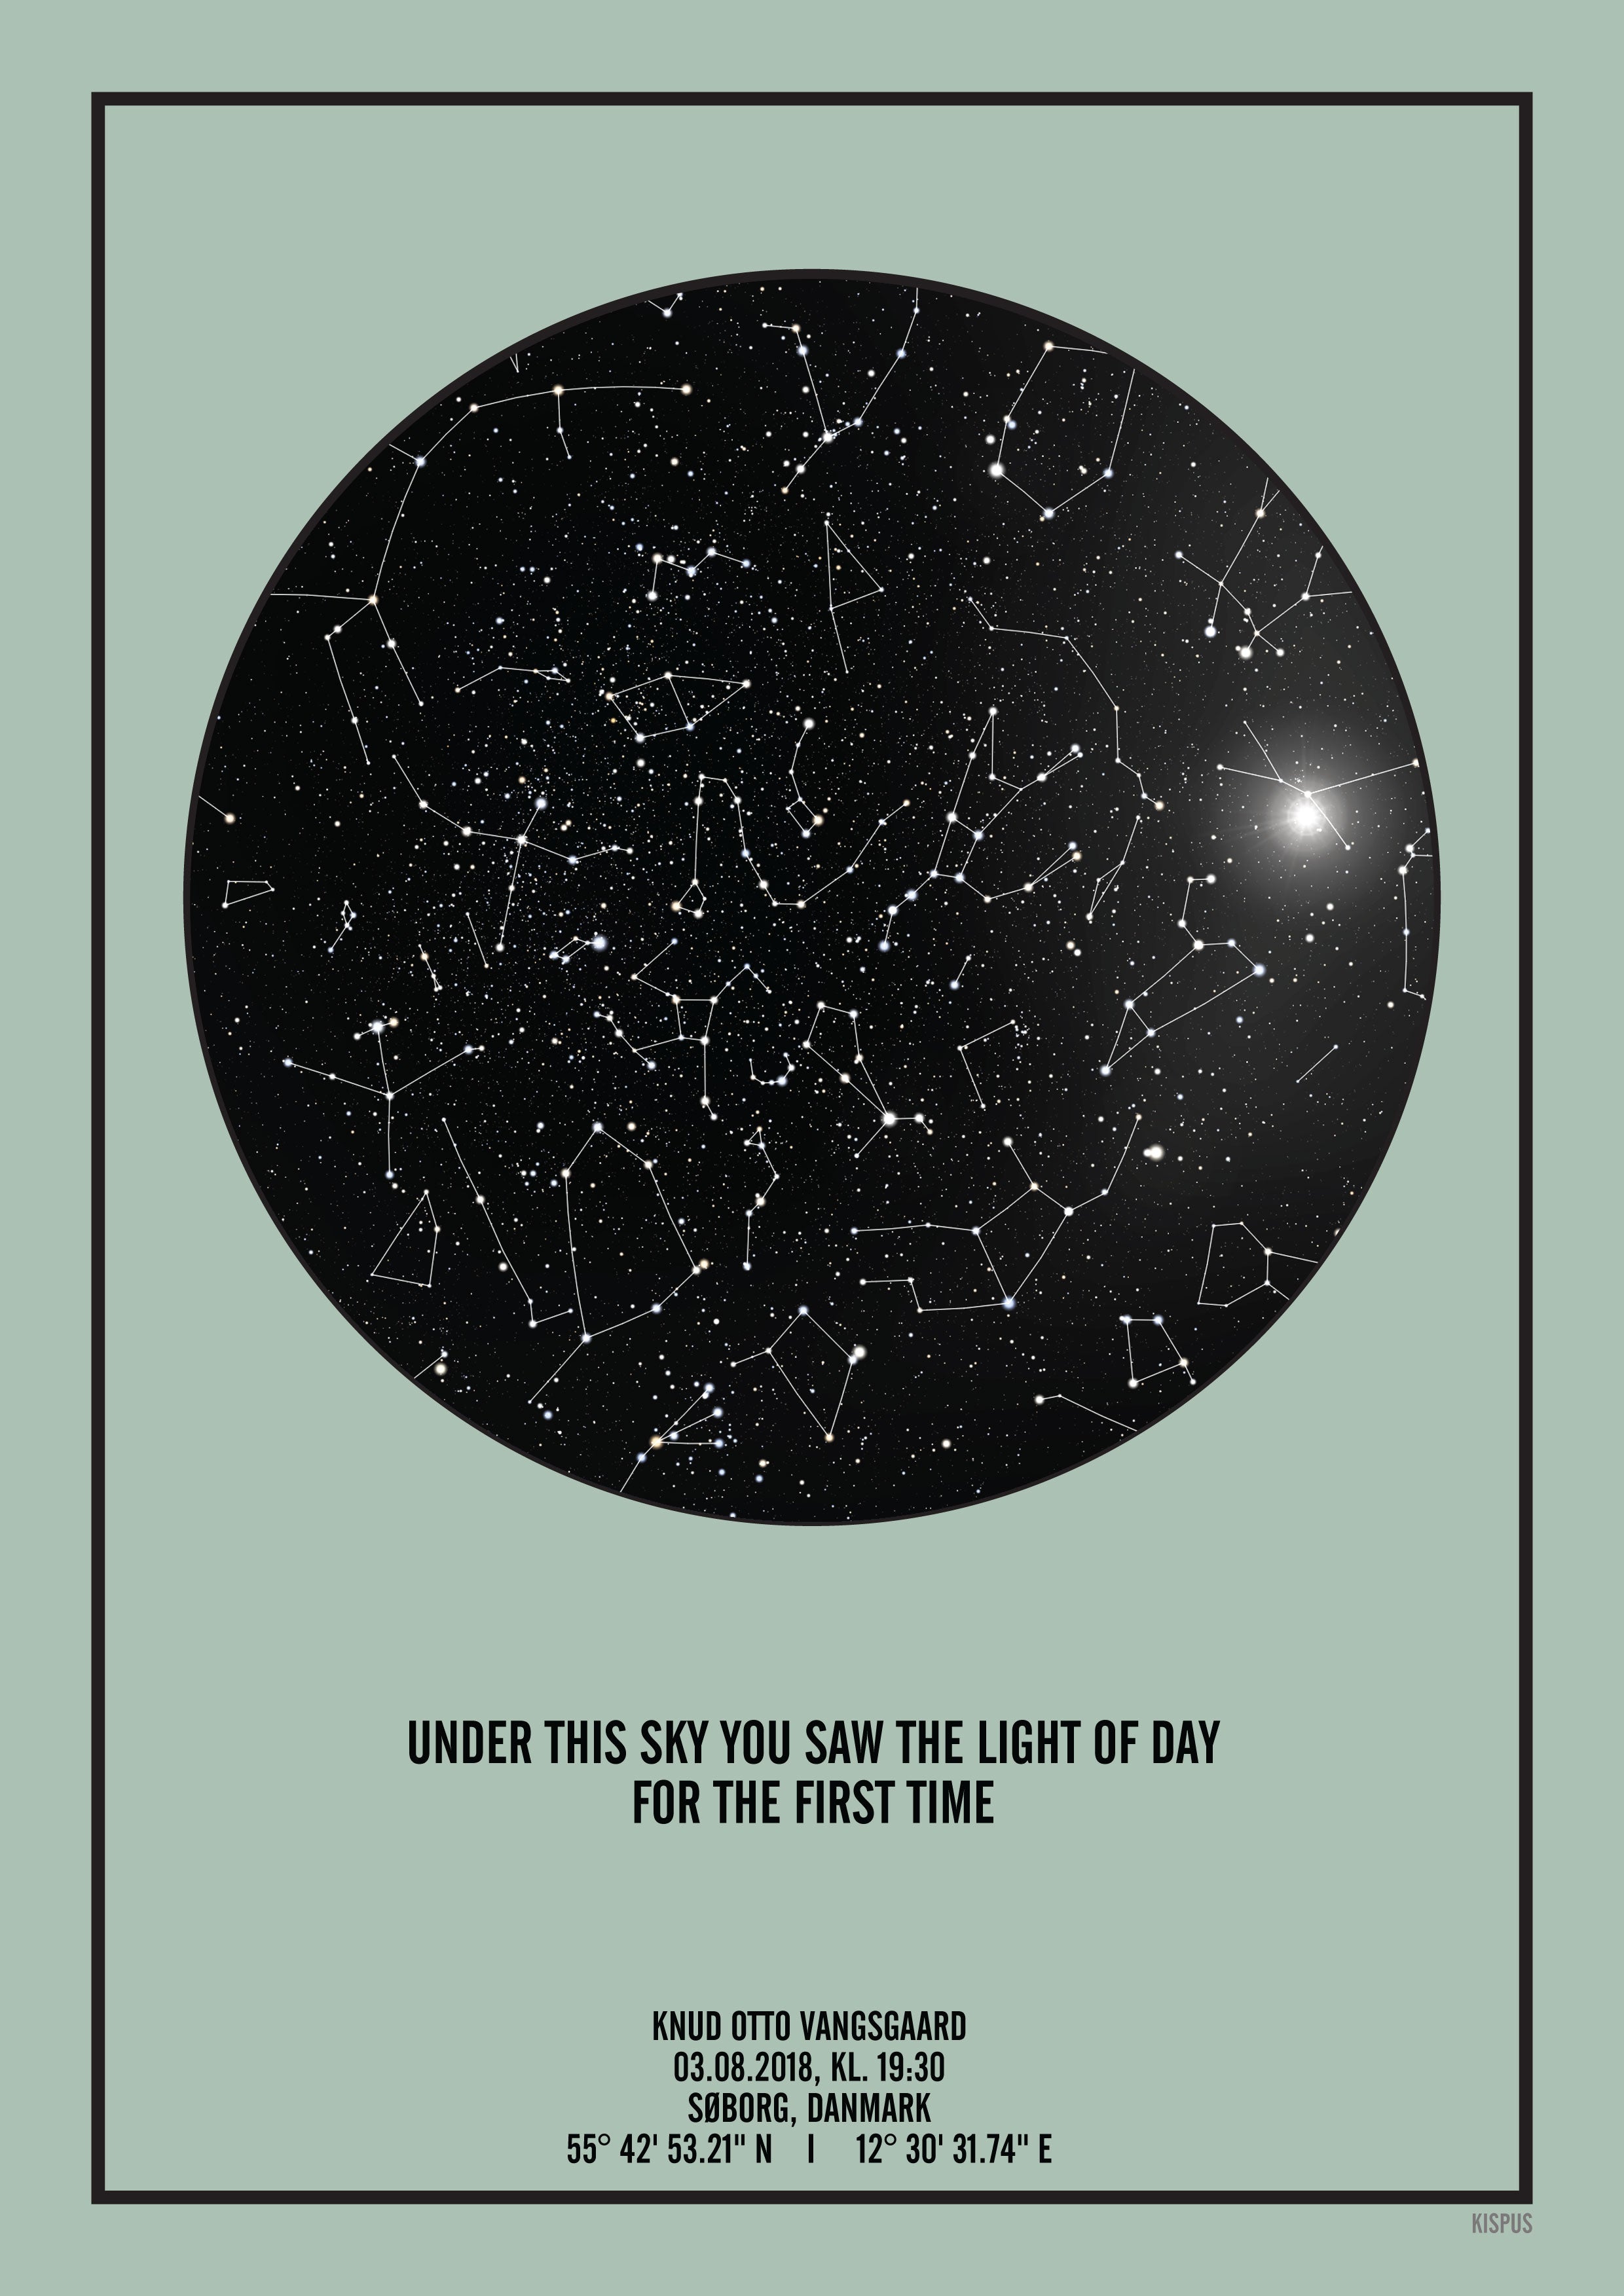 Se PERSONLIG STJERNEHIMMEL PLAKAT (LYSEGRØN) - 50x70 / Sort tekst + sort stjernehimmel / Stjernehimmel med stjernebilleder hos KISPUS